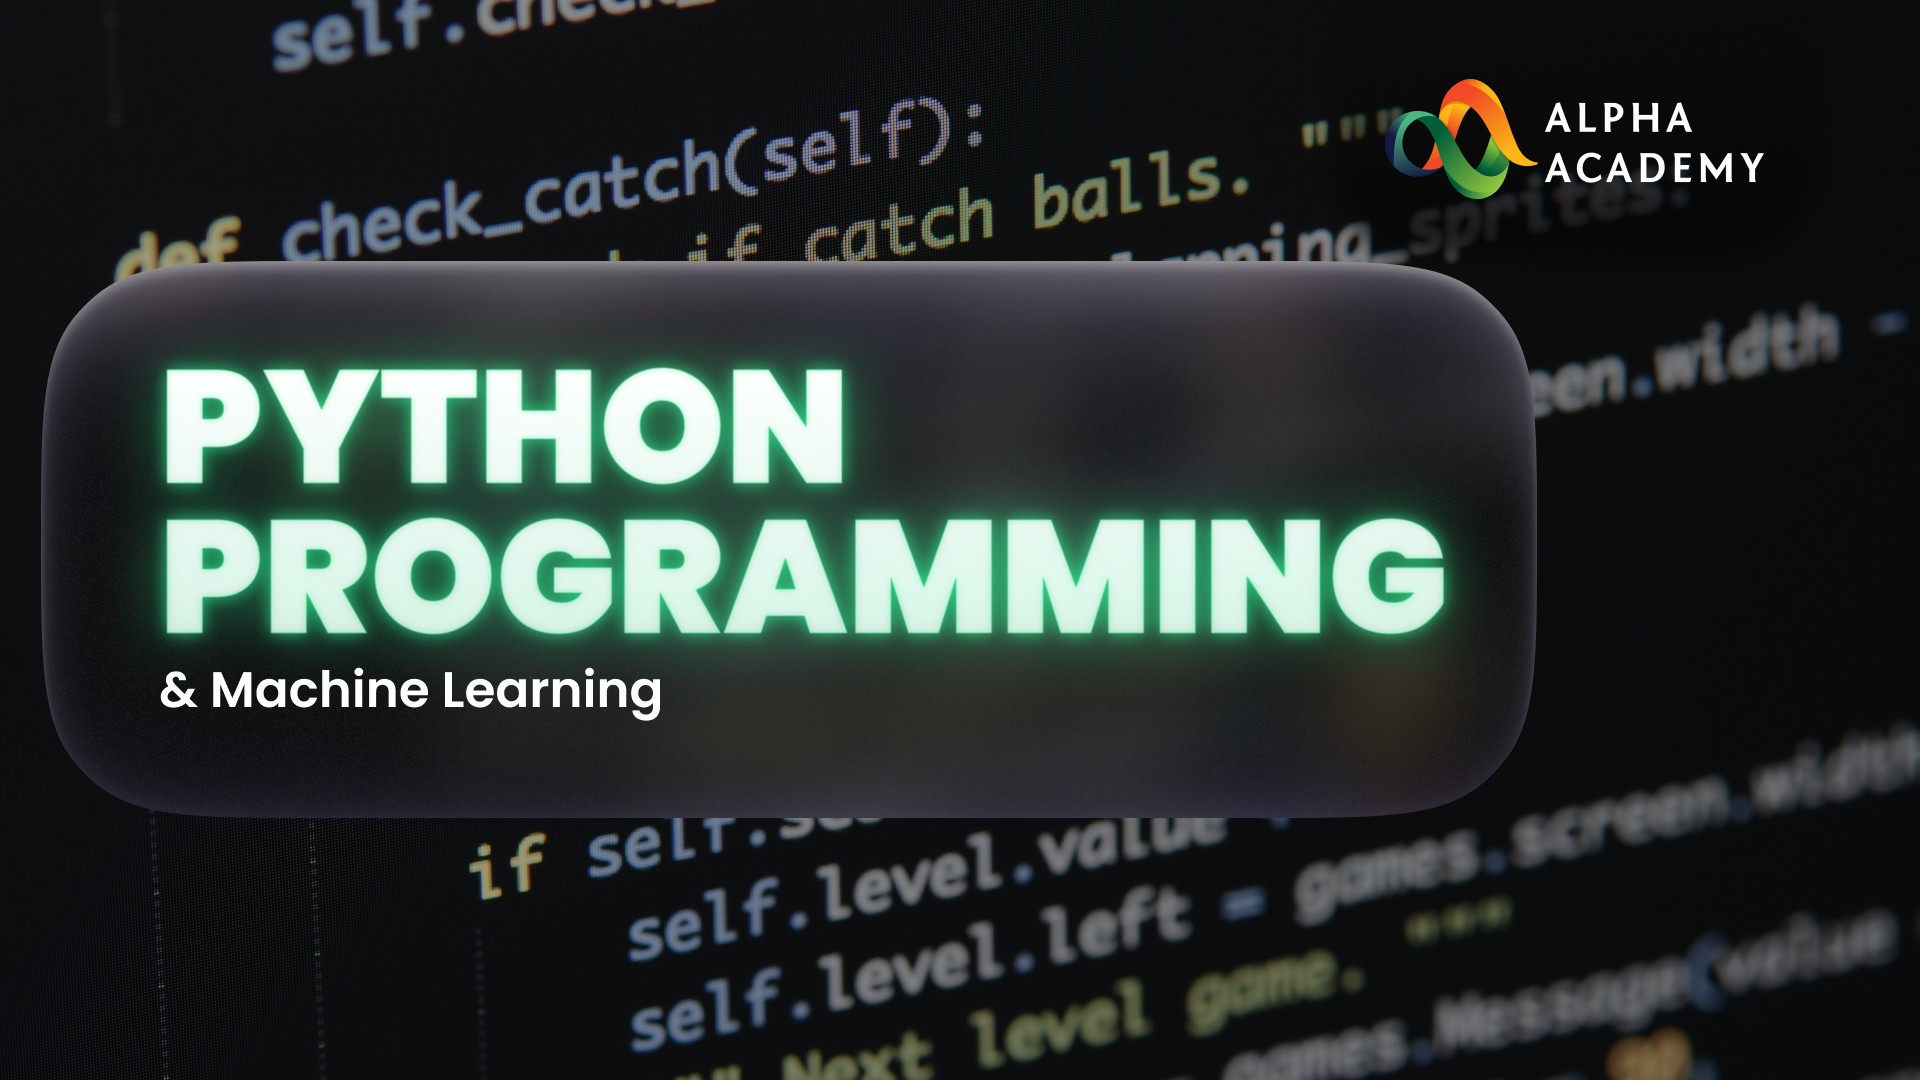 Python Programming & Machine Learning Alpha Academy Code 18.07 usd